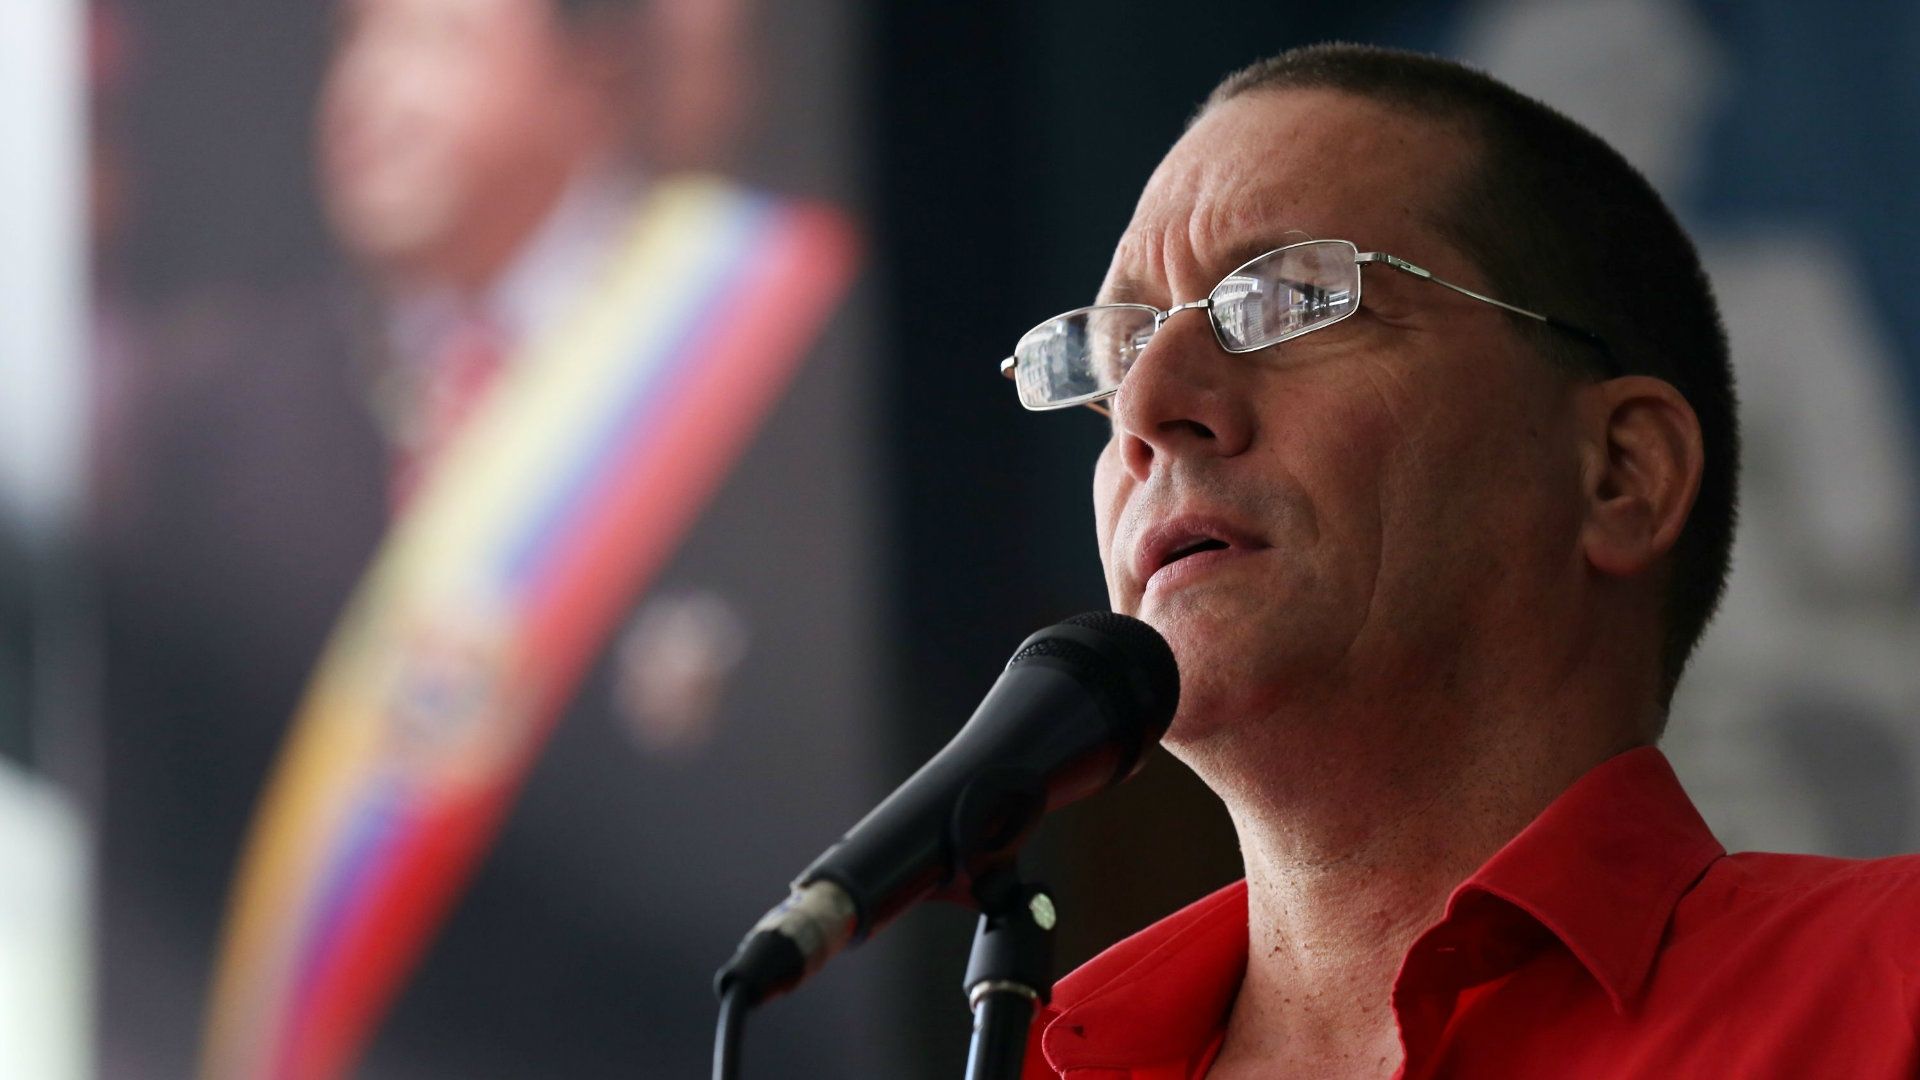 Jesús Faría, Venezuelan National Assembly member and PSUV leader, speaking. File photo.